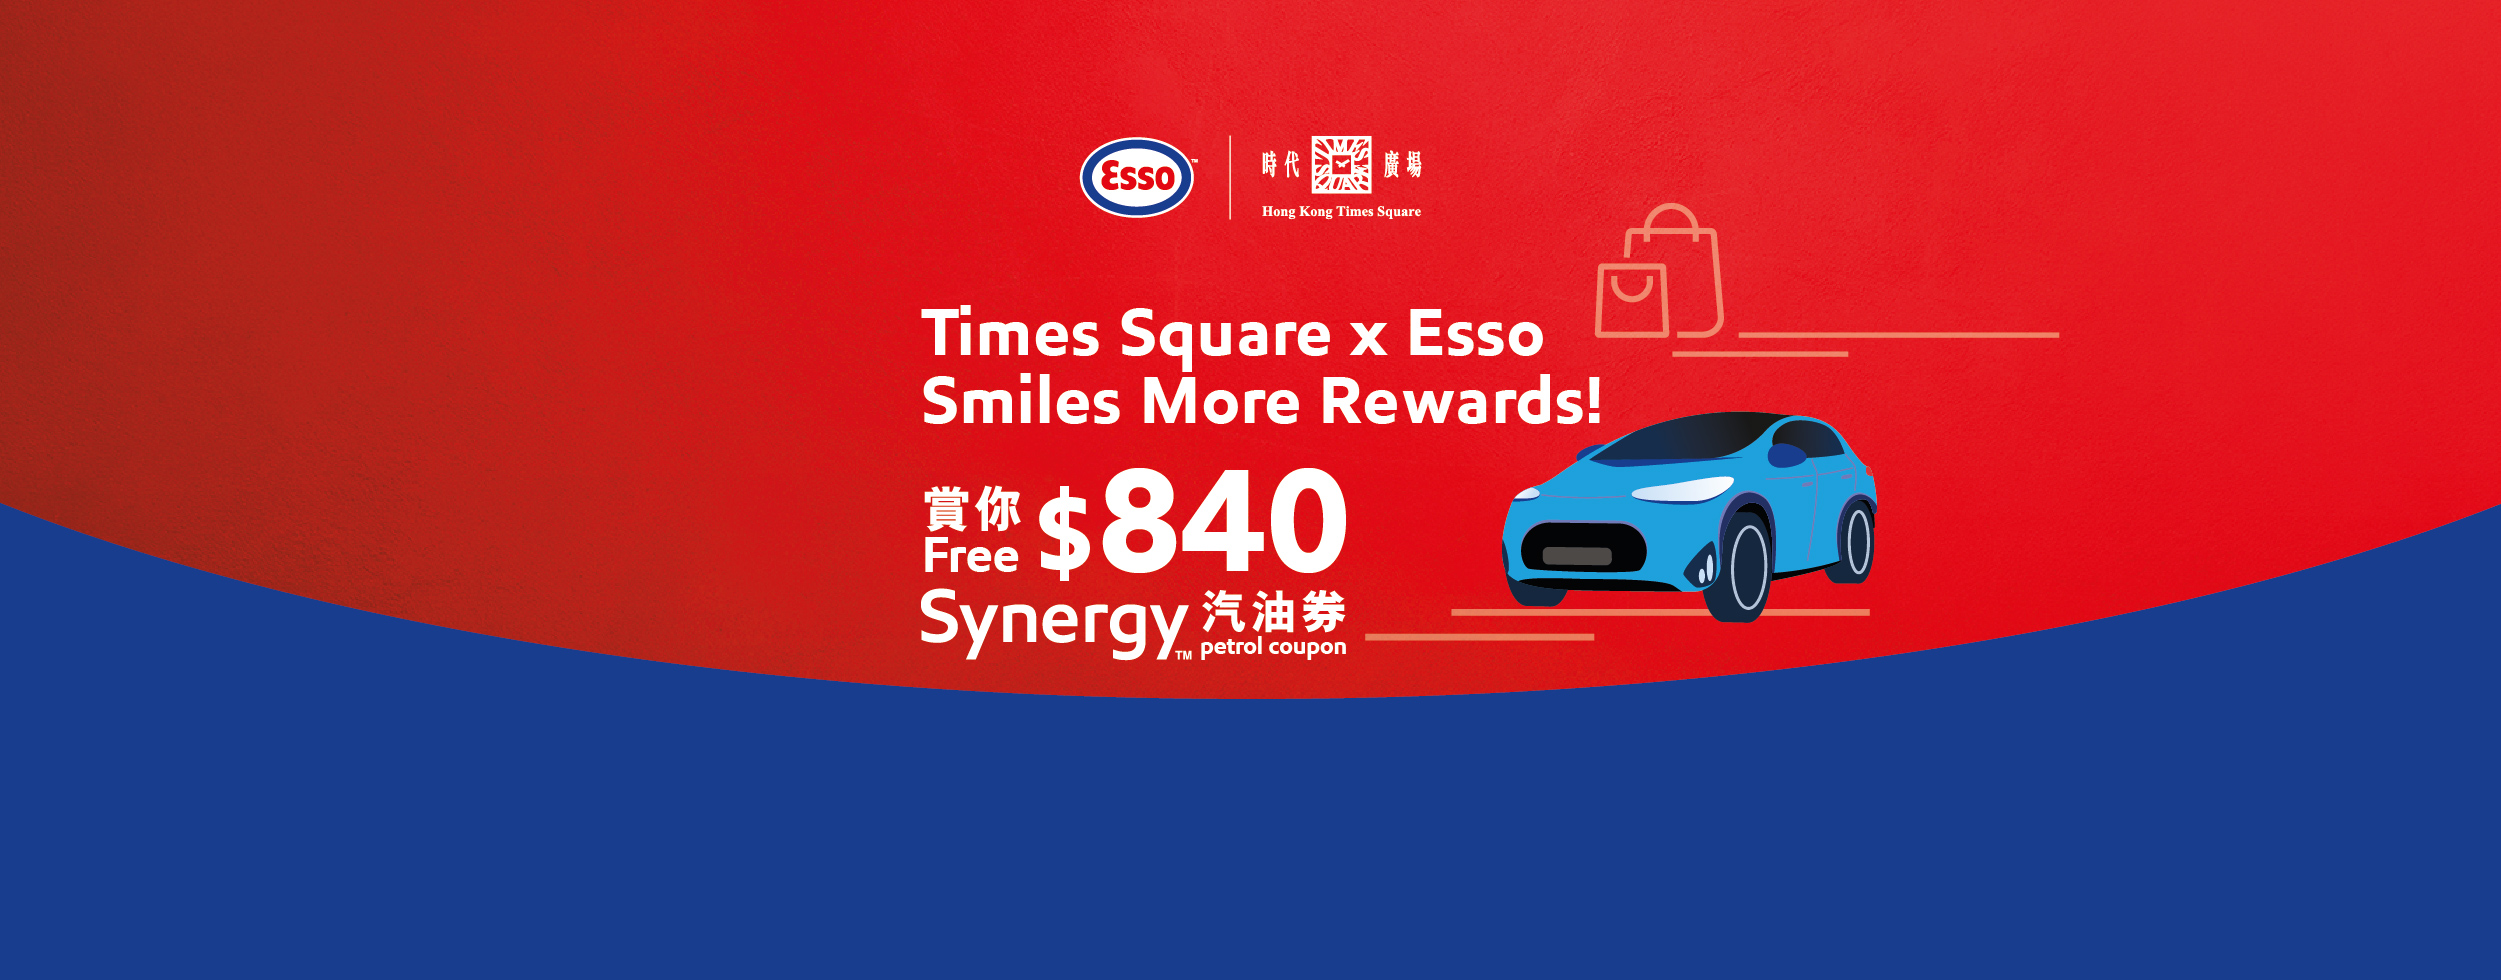 Times Square x Esso Smiles More Rewards!